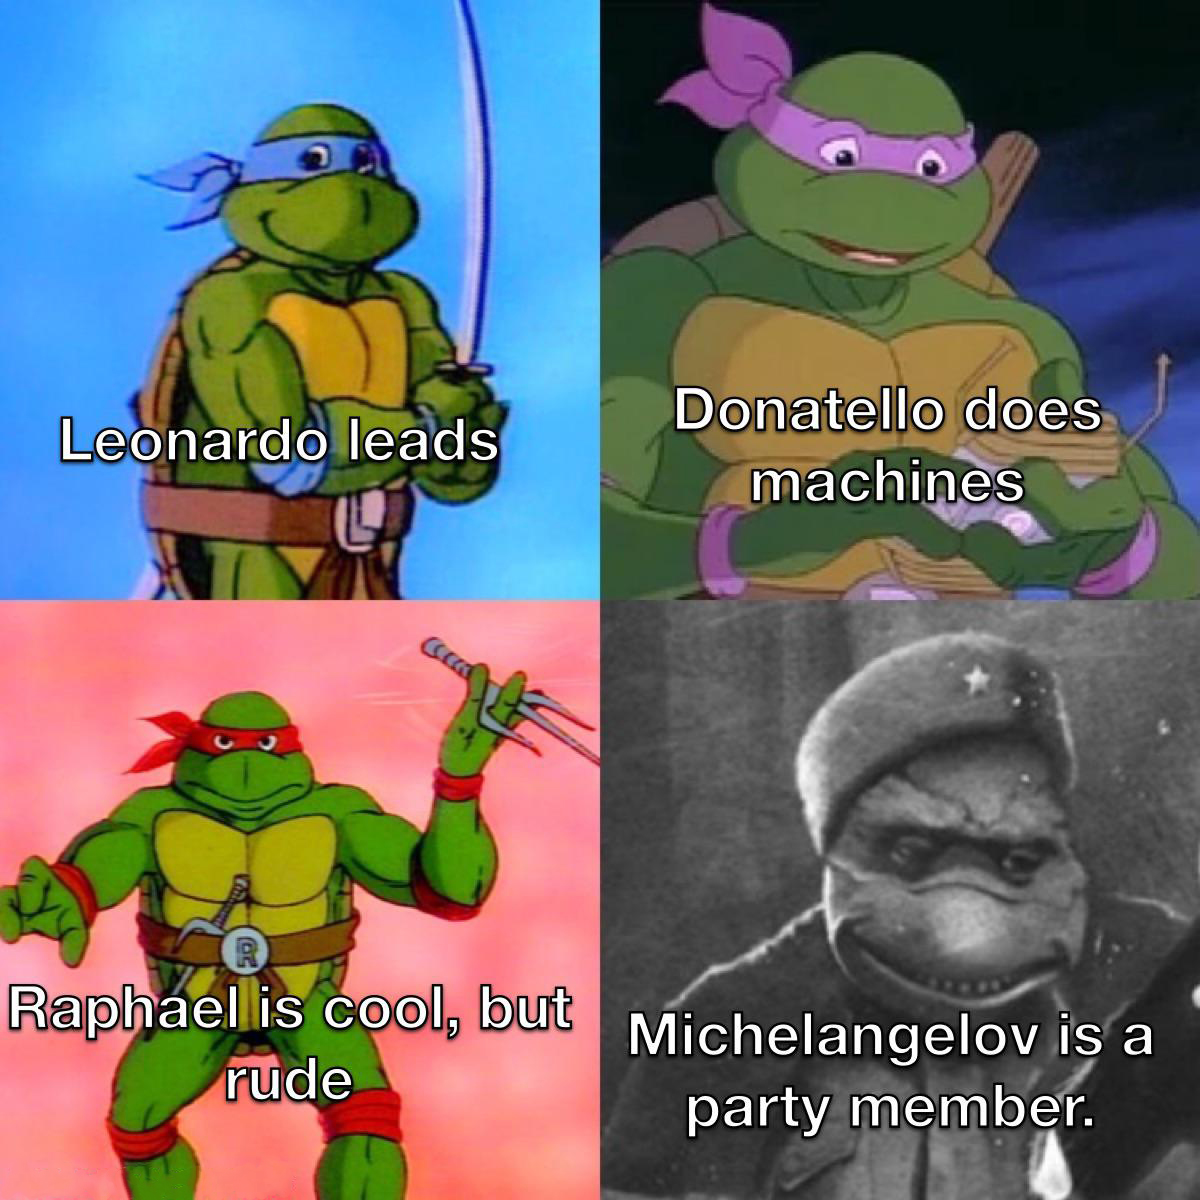 mascot - Leonardo leads Donatello does machines Raphaellis cool, but rude Michelangelov is a party member.